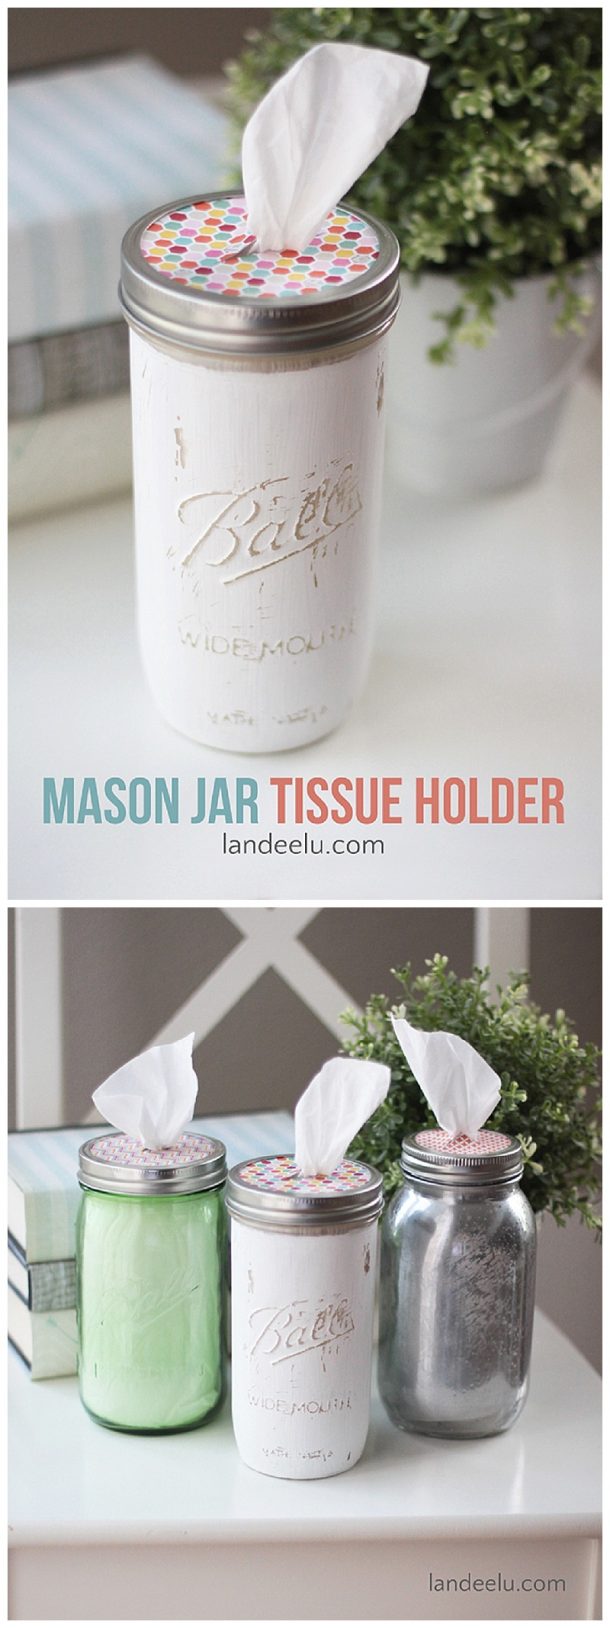 Mason jar tissue holder landeeseelandeedo